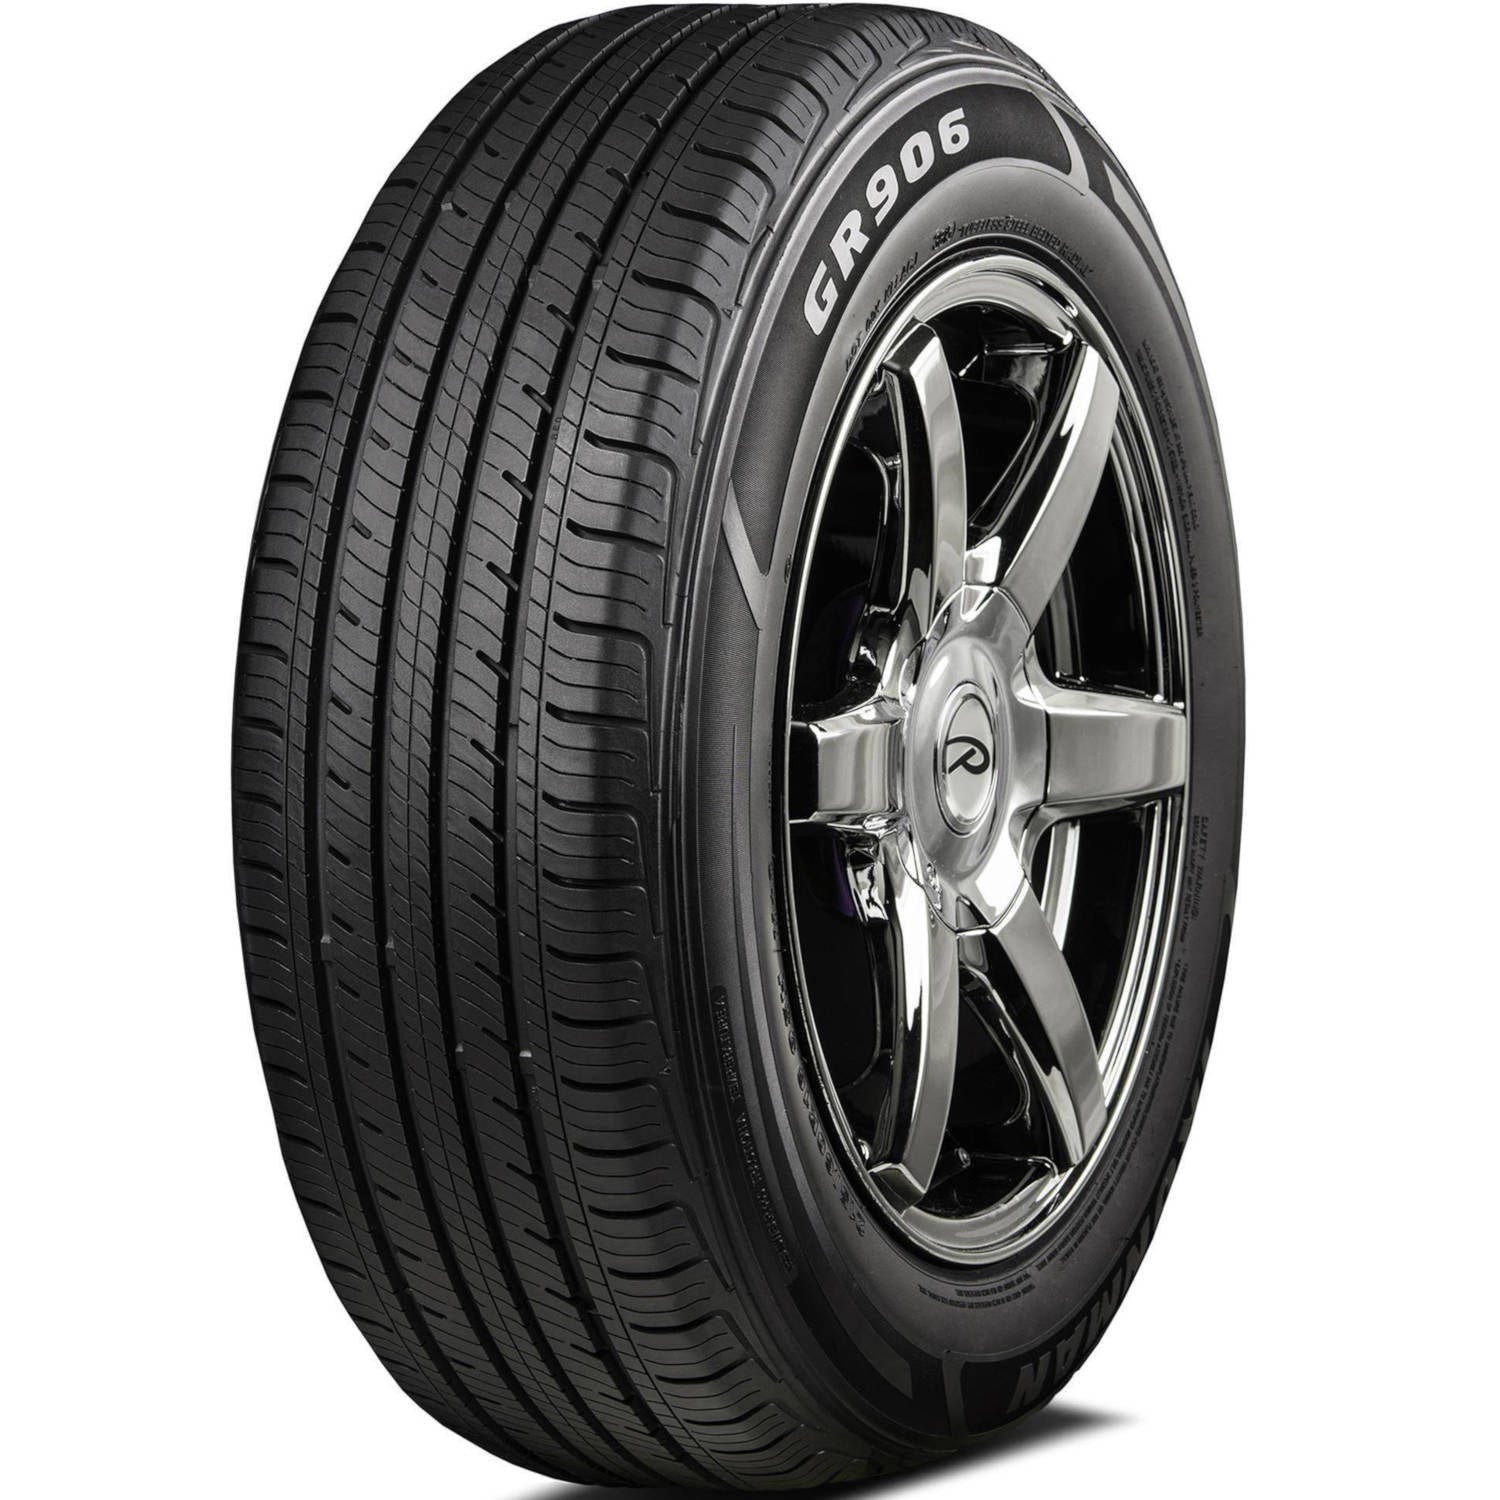 IRONMAN GR906 235/60R17 (28.1X9.3R 17) Tires